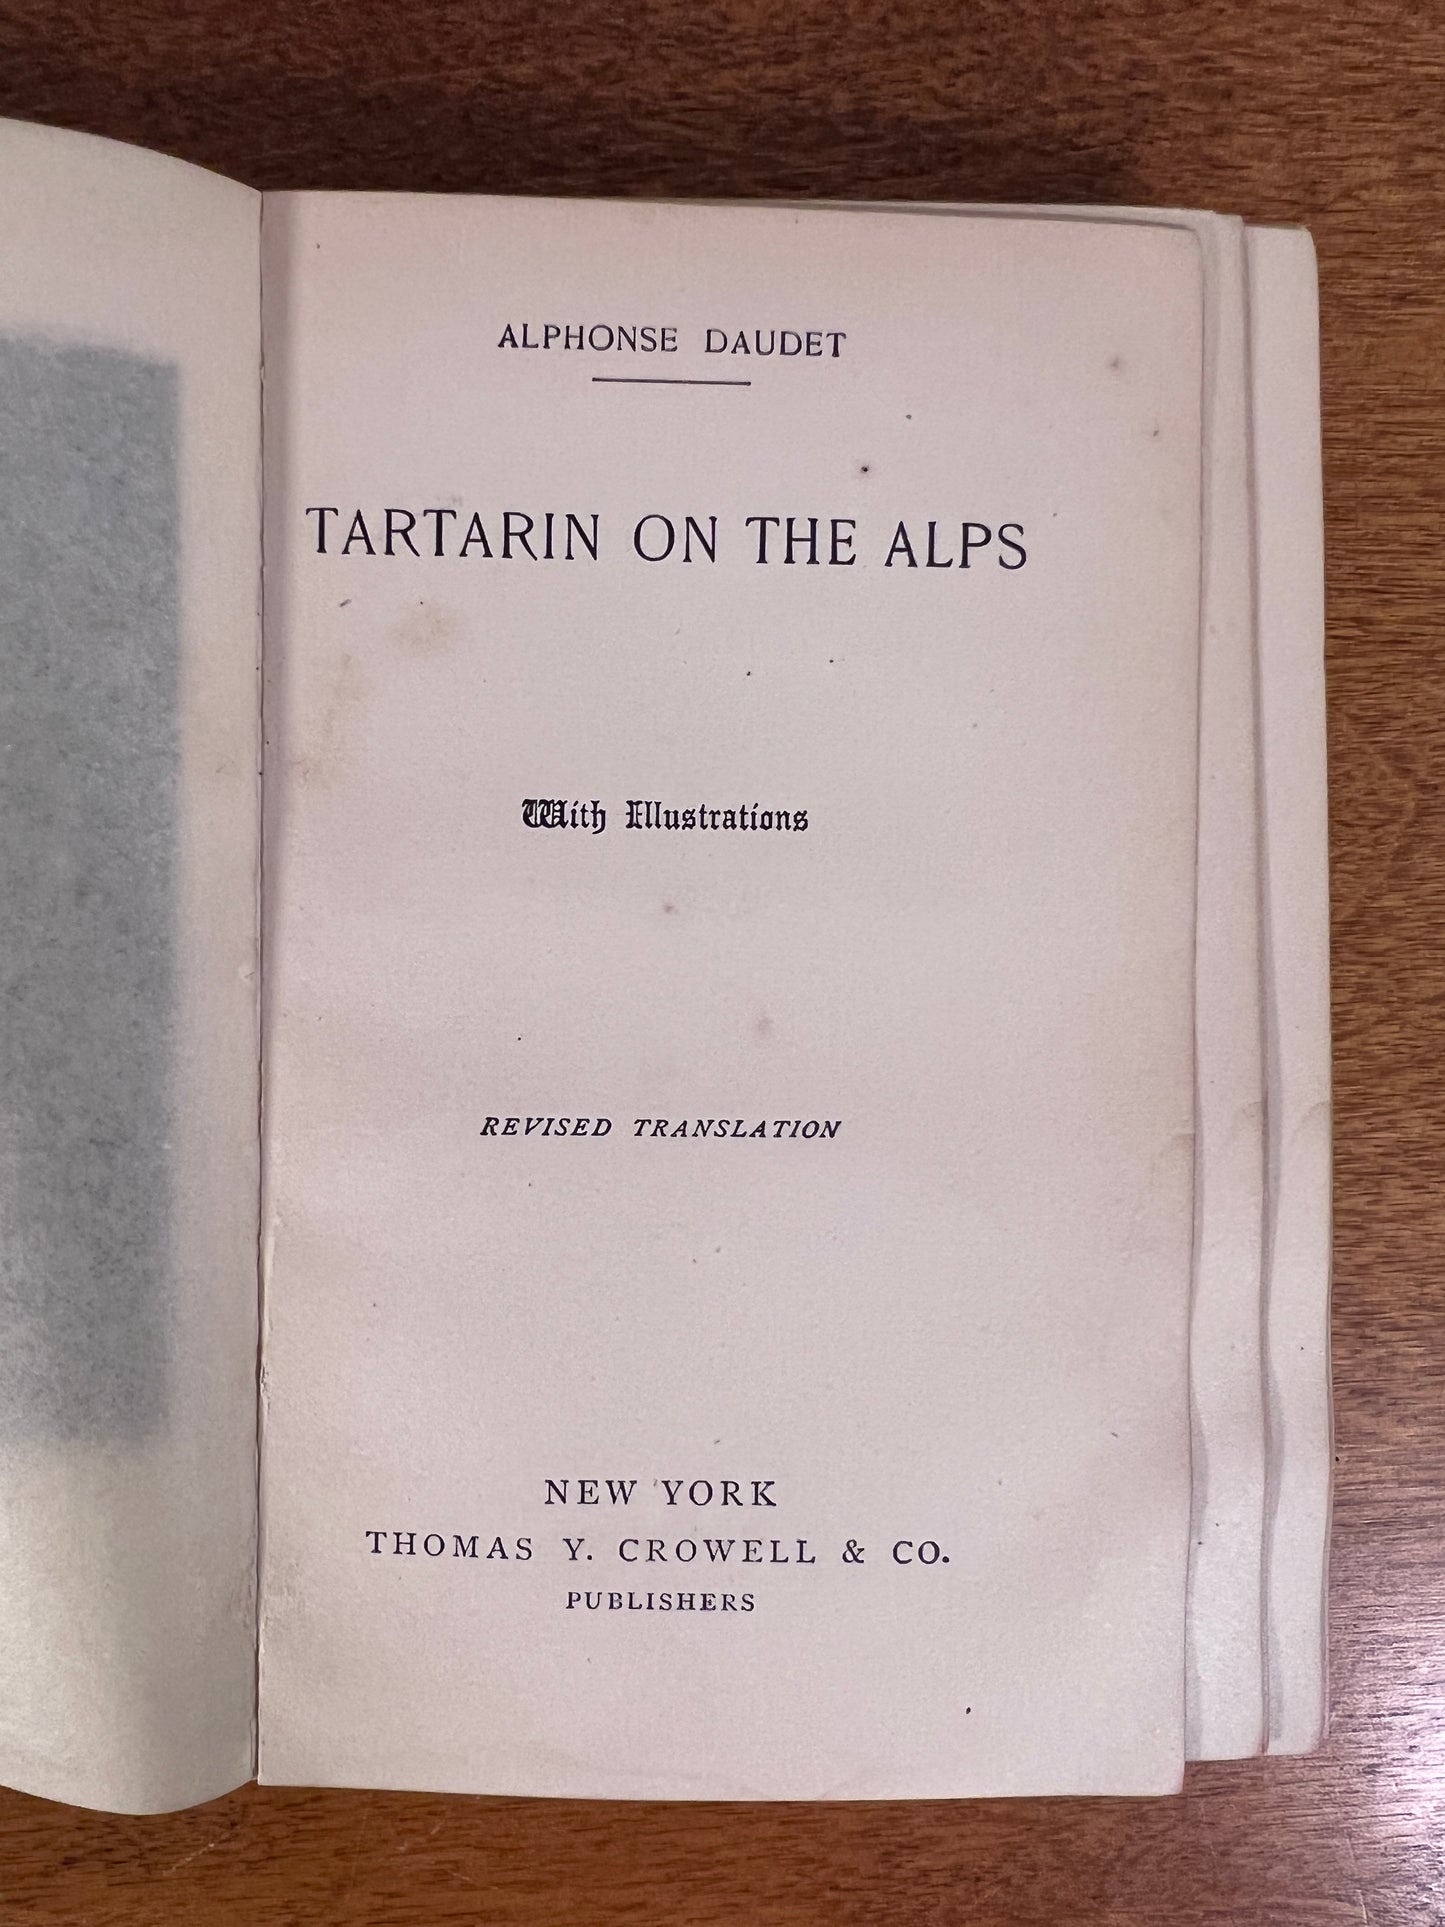 Tartarin on the Alps by Aphonse Daudet [1894]